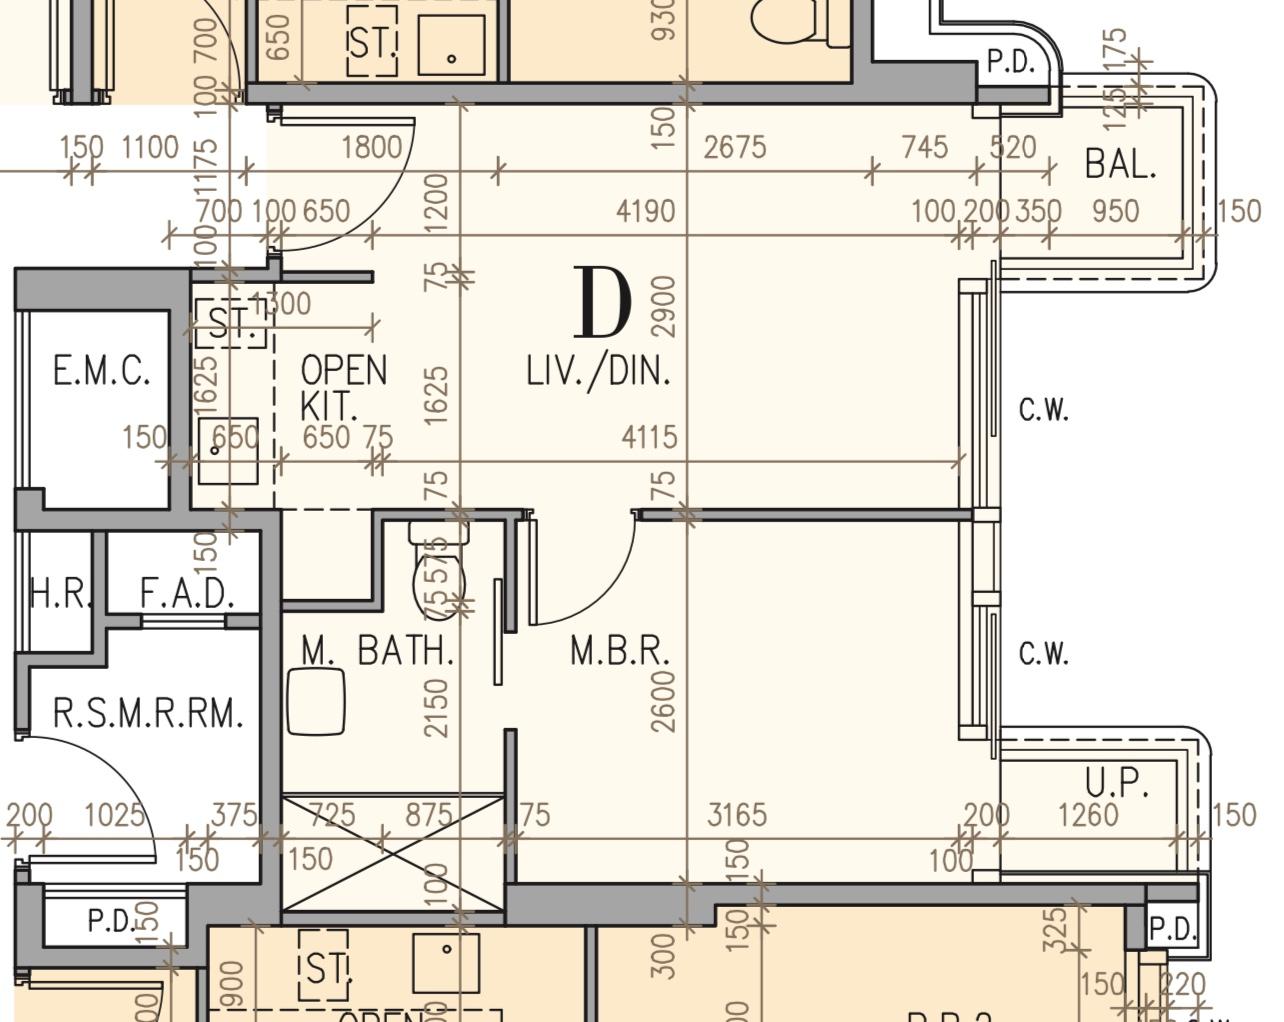 ONE CENTRAL PLACE 18樓D室平面圖，實用383方呎一房間隔，屬最細一款單位。